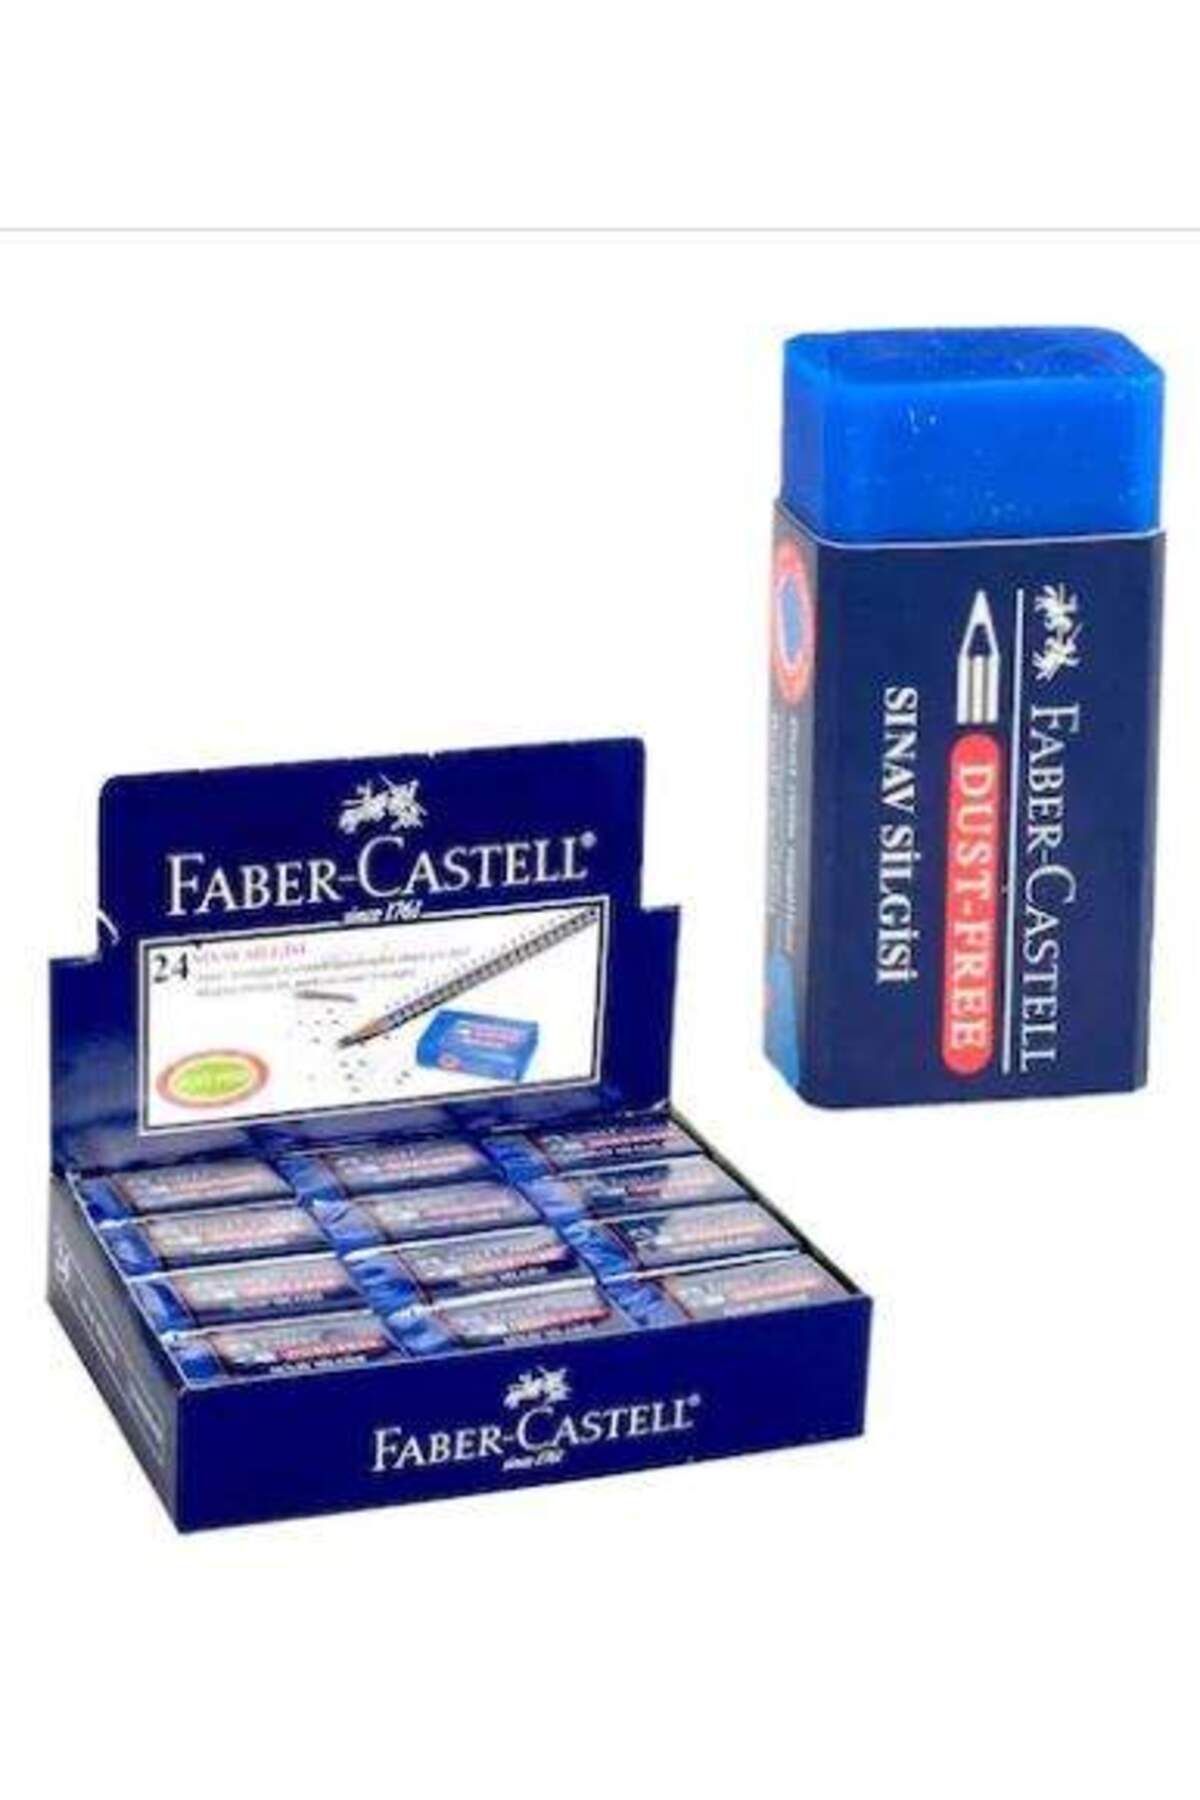 Faber Castell Faber-castell Sınav Silgisi Dust-free Mavi 24’lü Paket